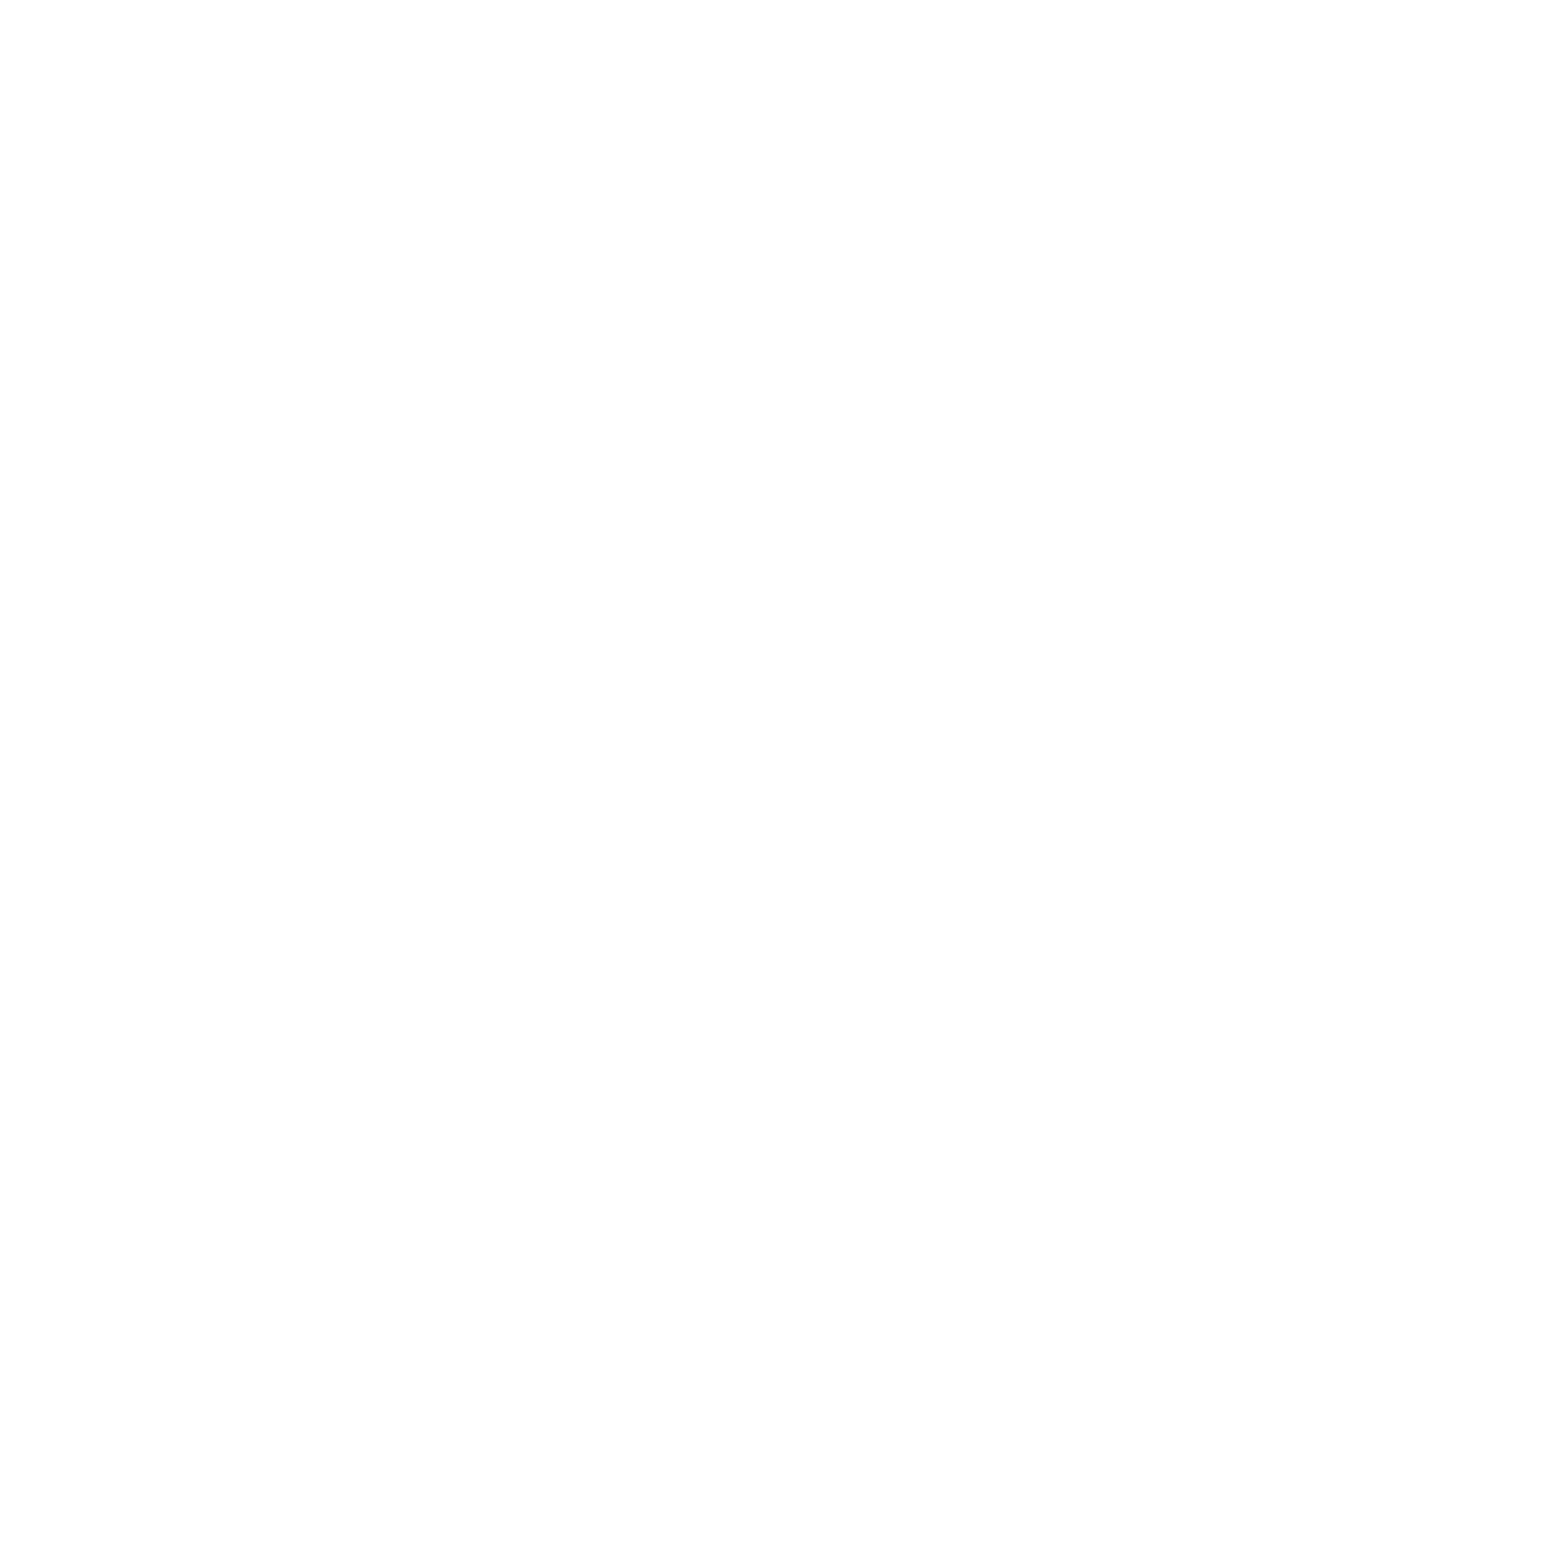 Phillip Ginter